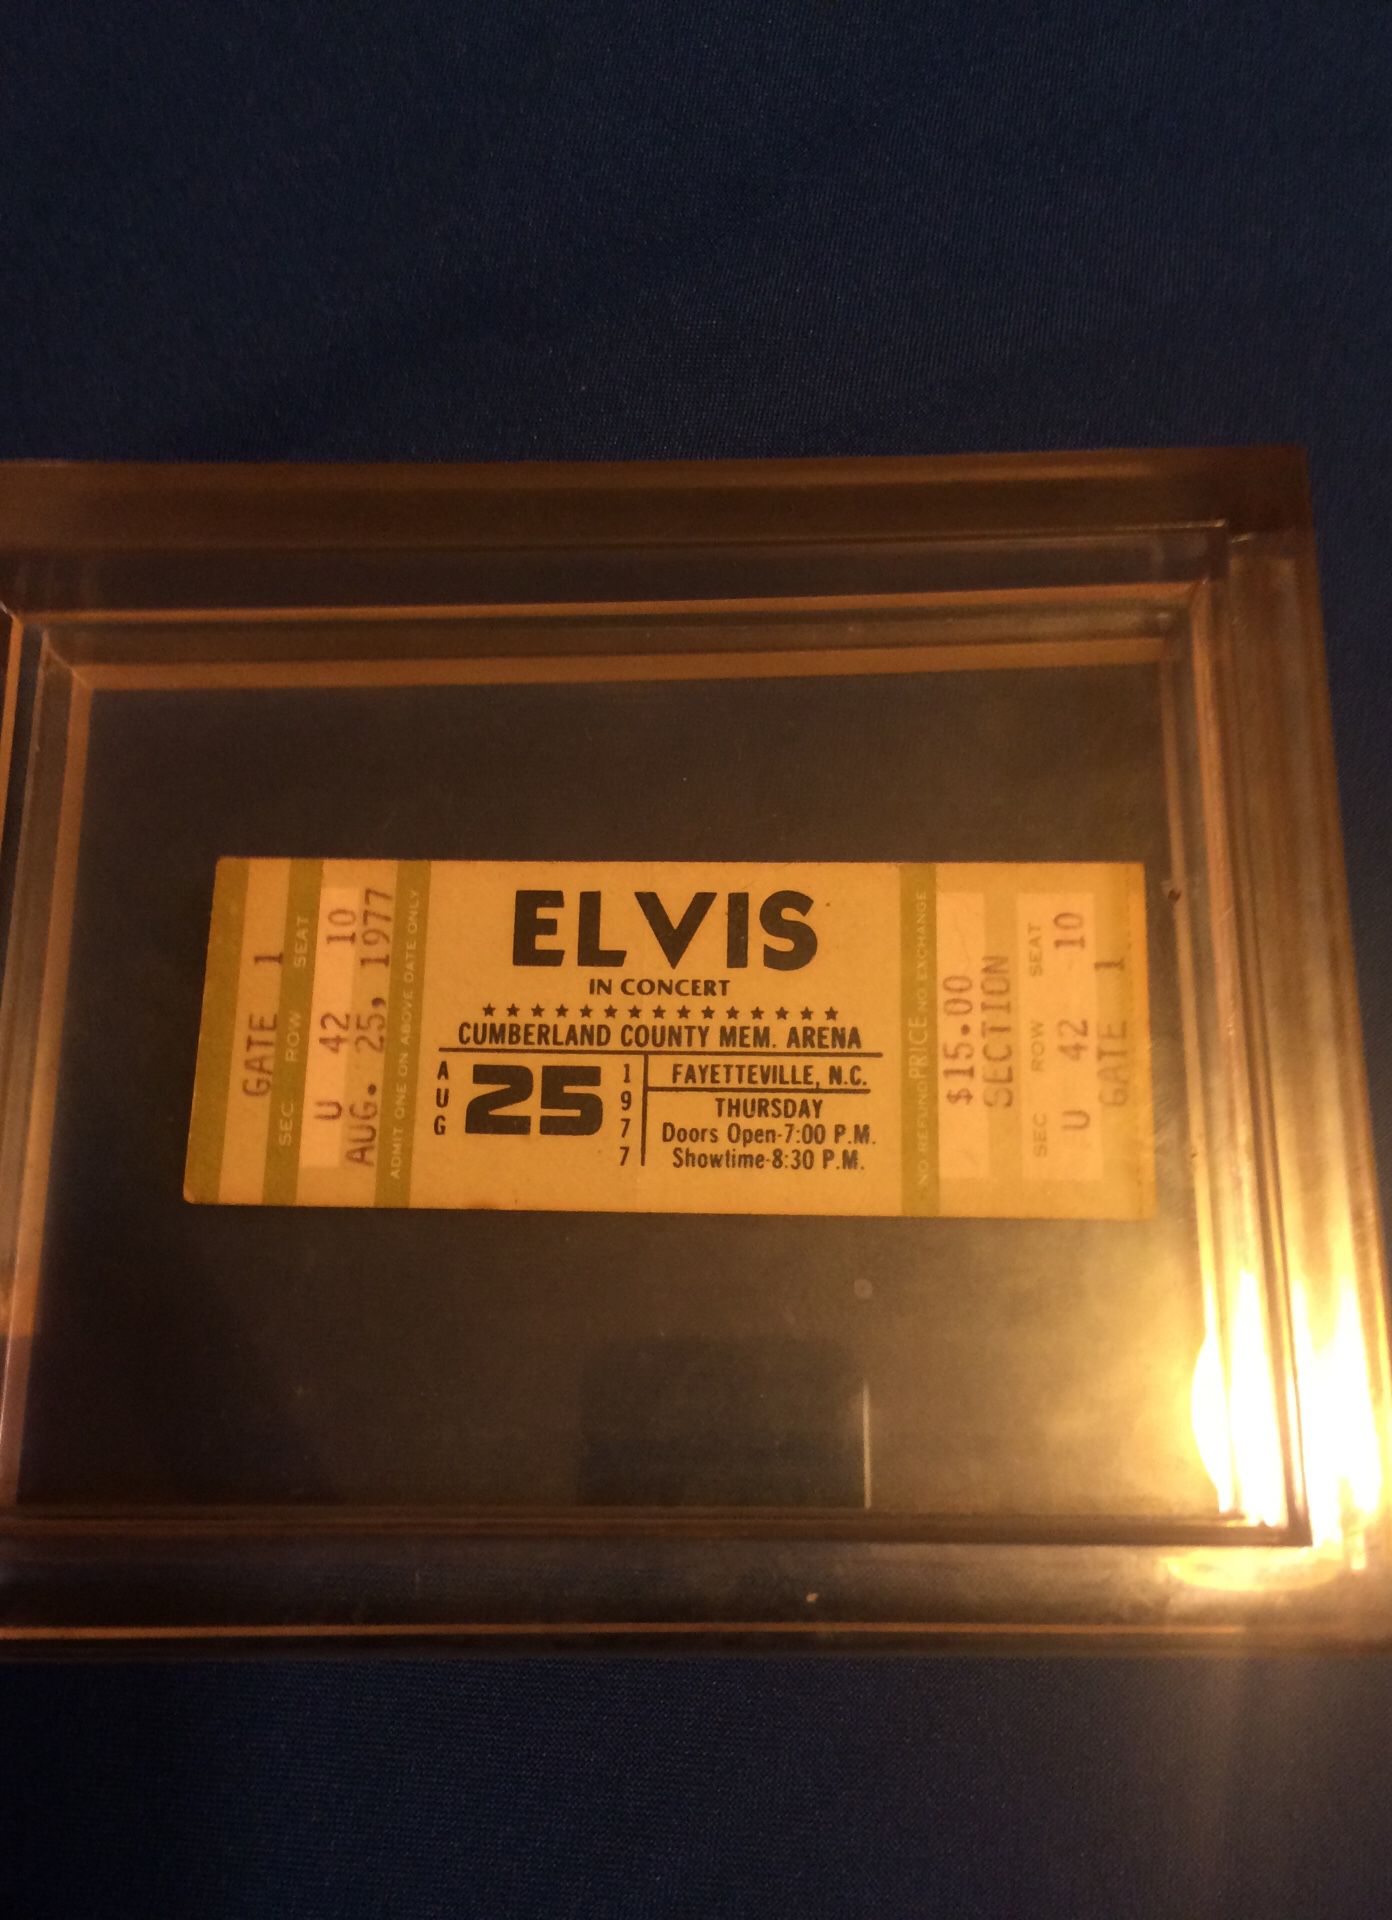 Concert ticket to see ELVIS